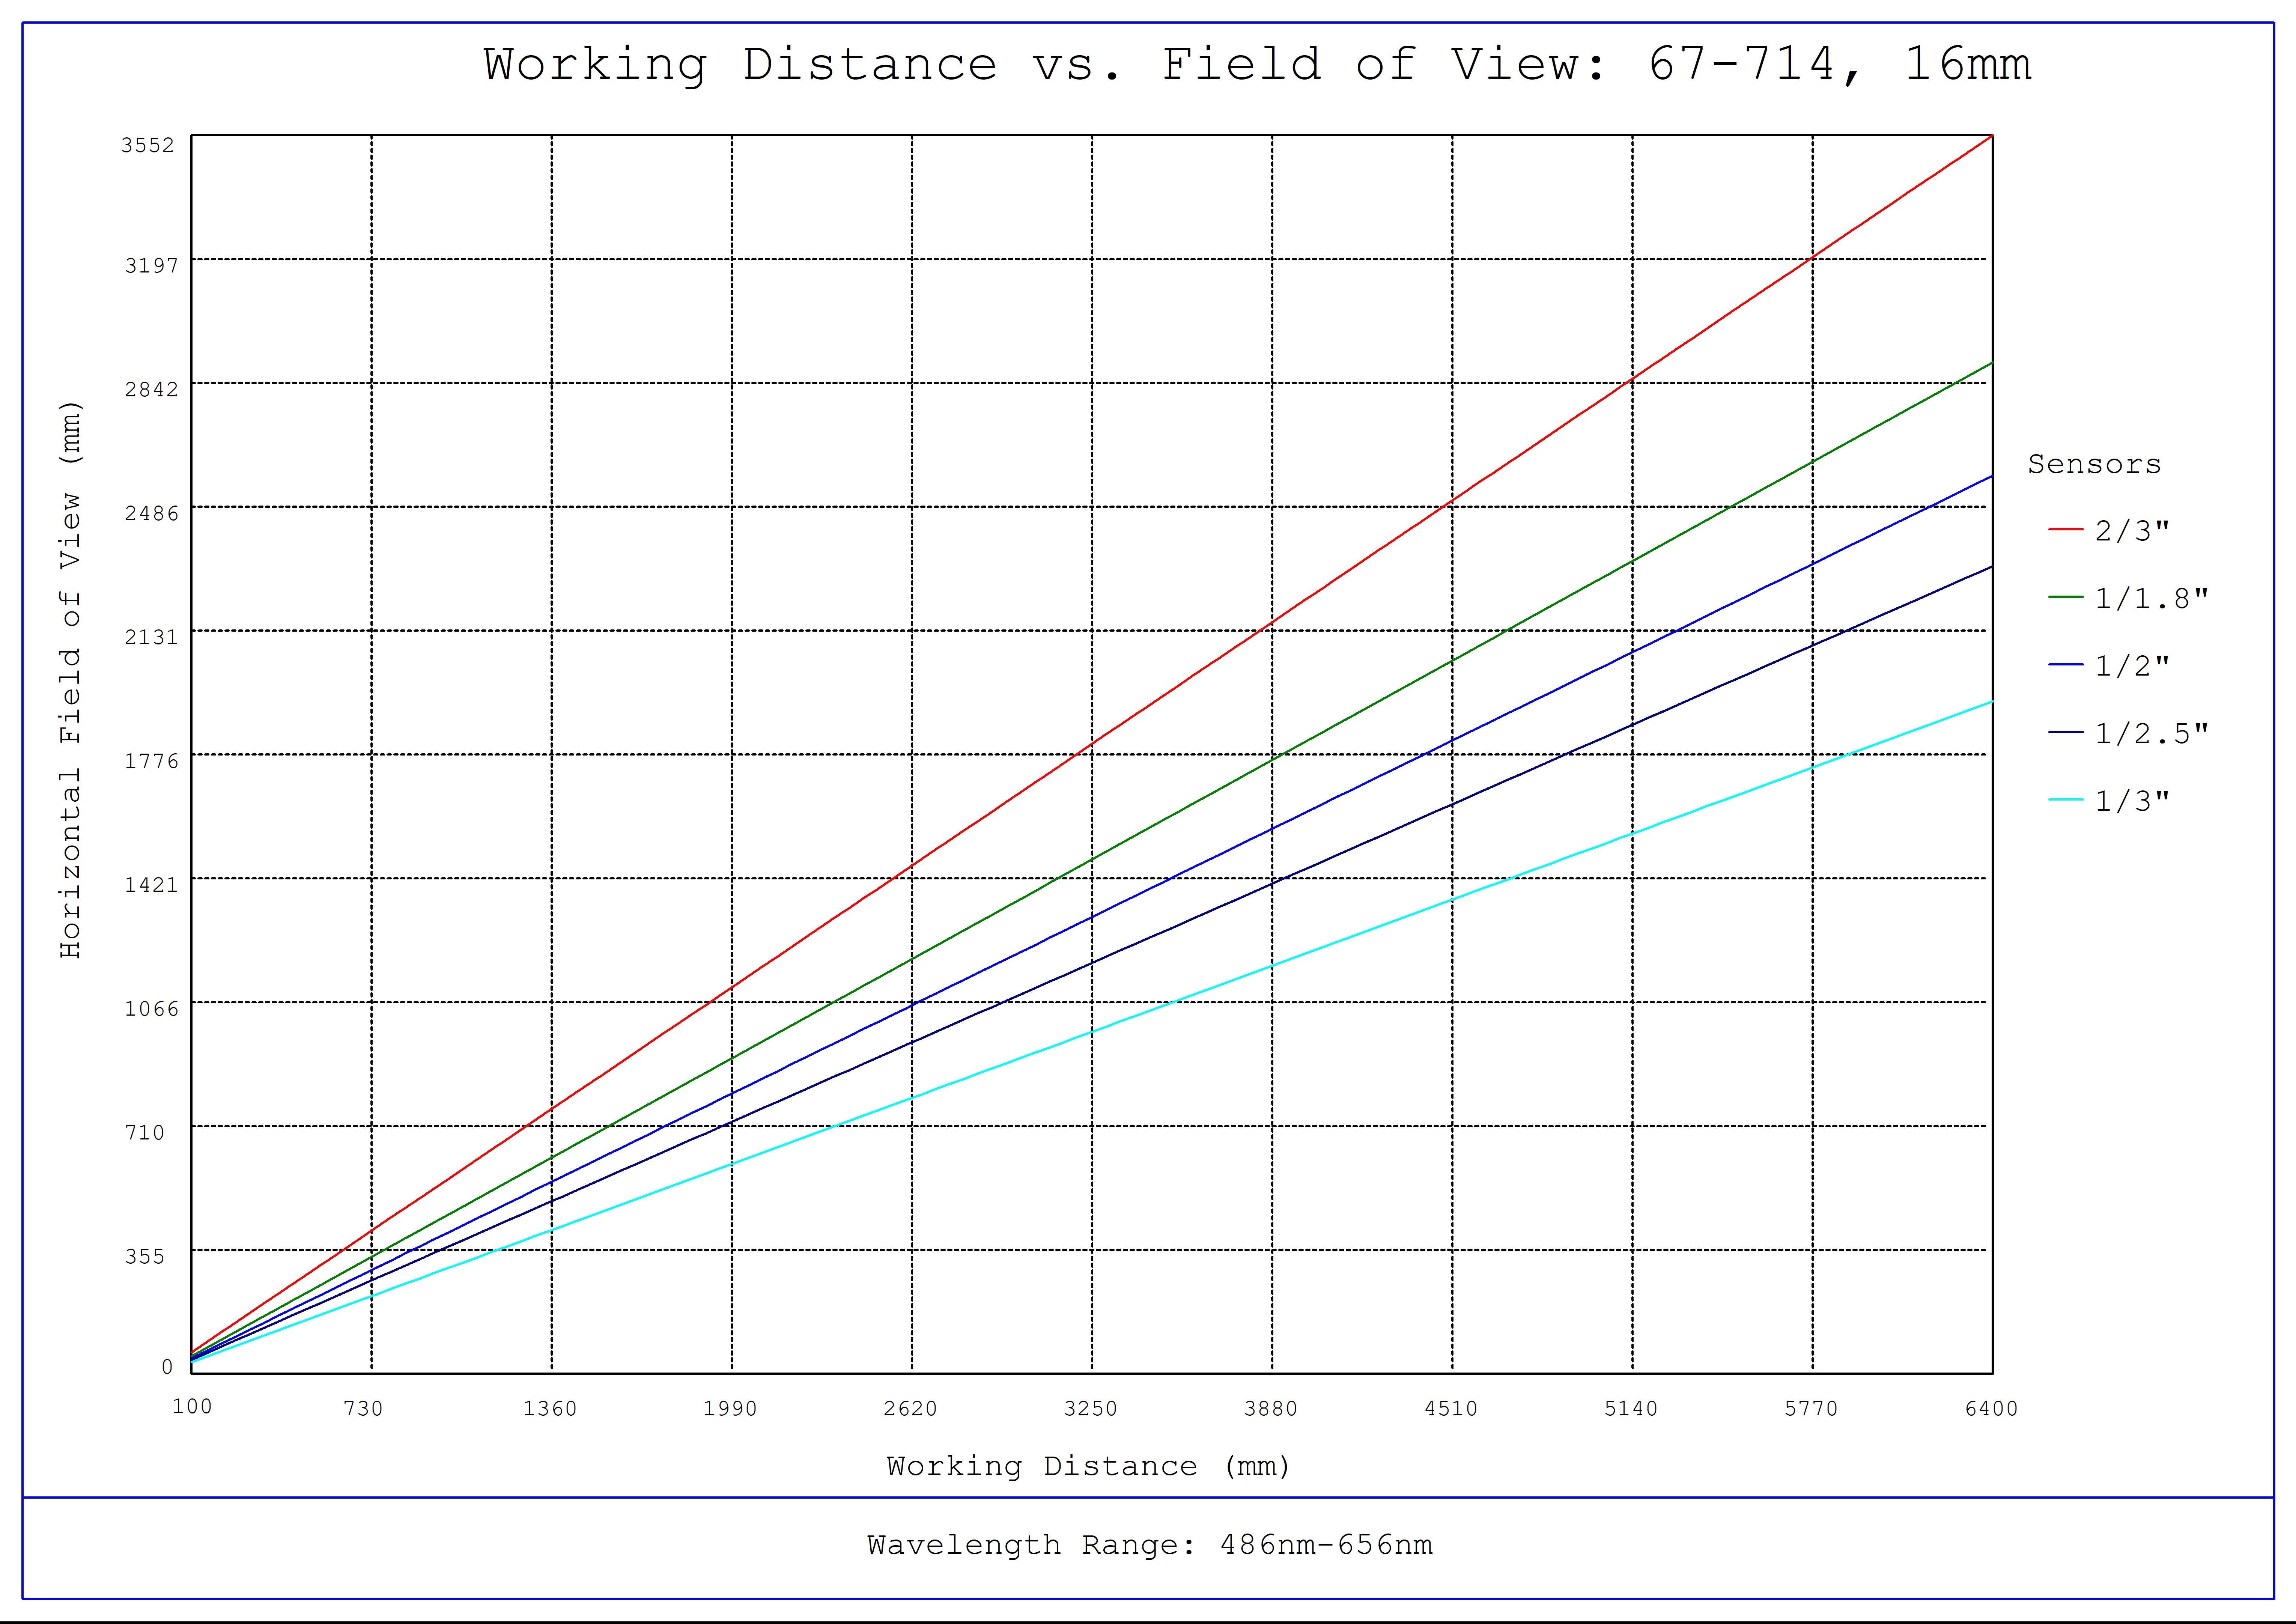 #67-714, 16mm C VIS-NIR Series Fixed Focal Length Lens, Working Distance versus Field of View Plot